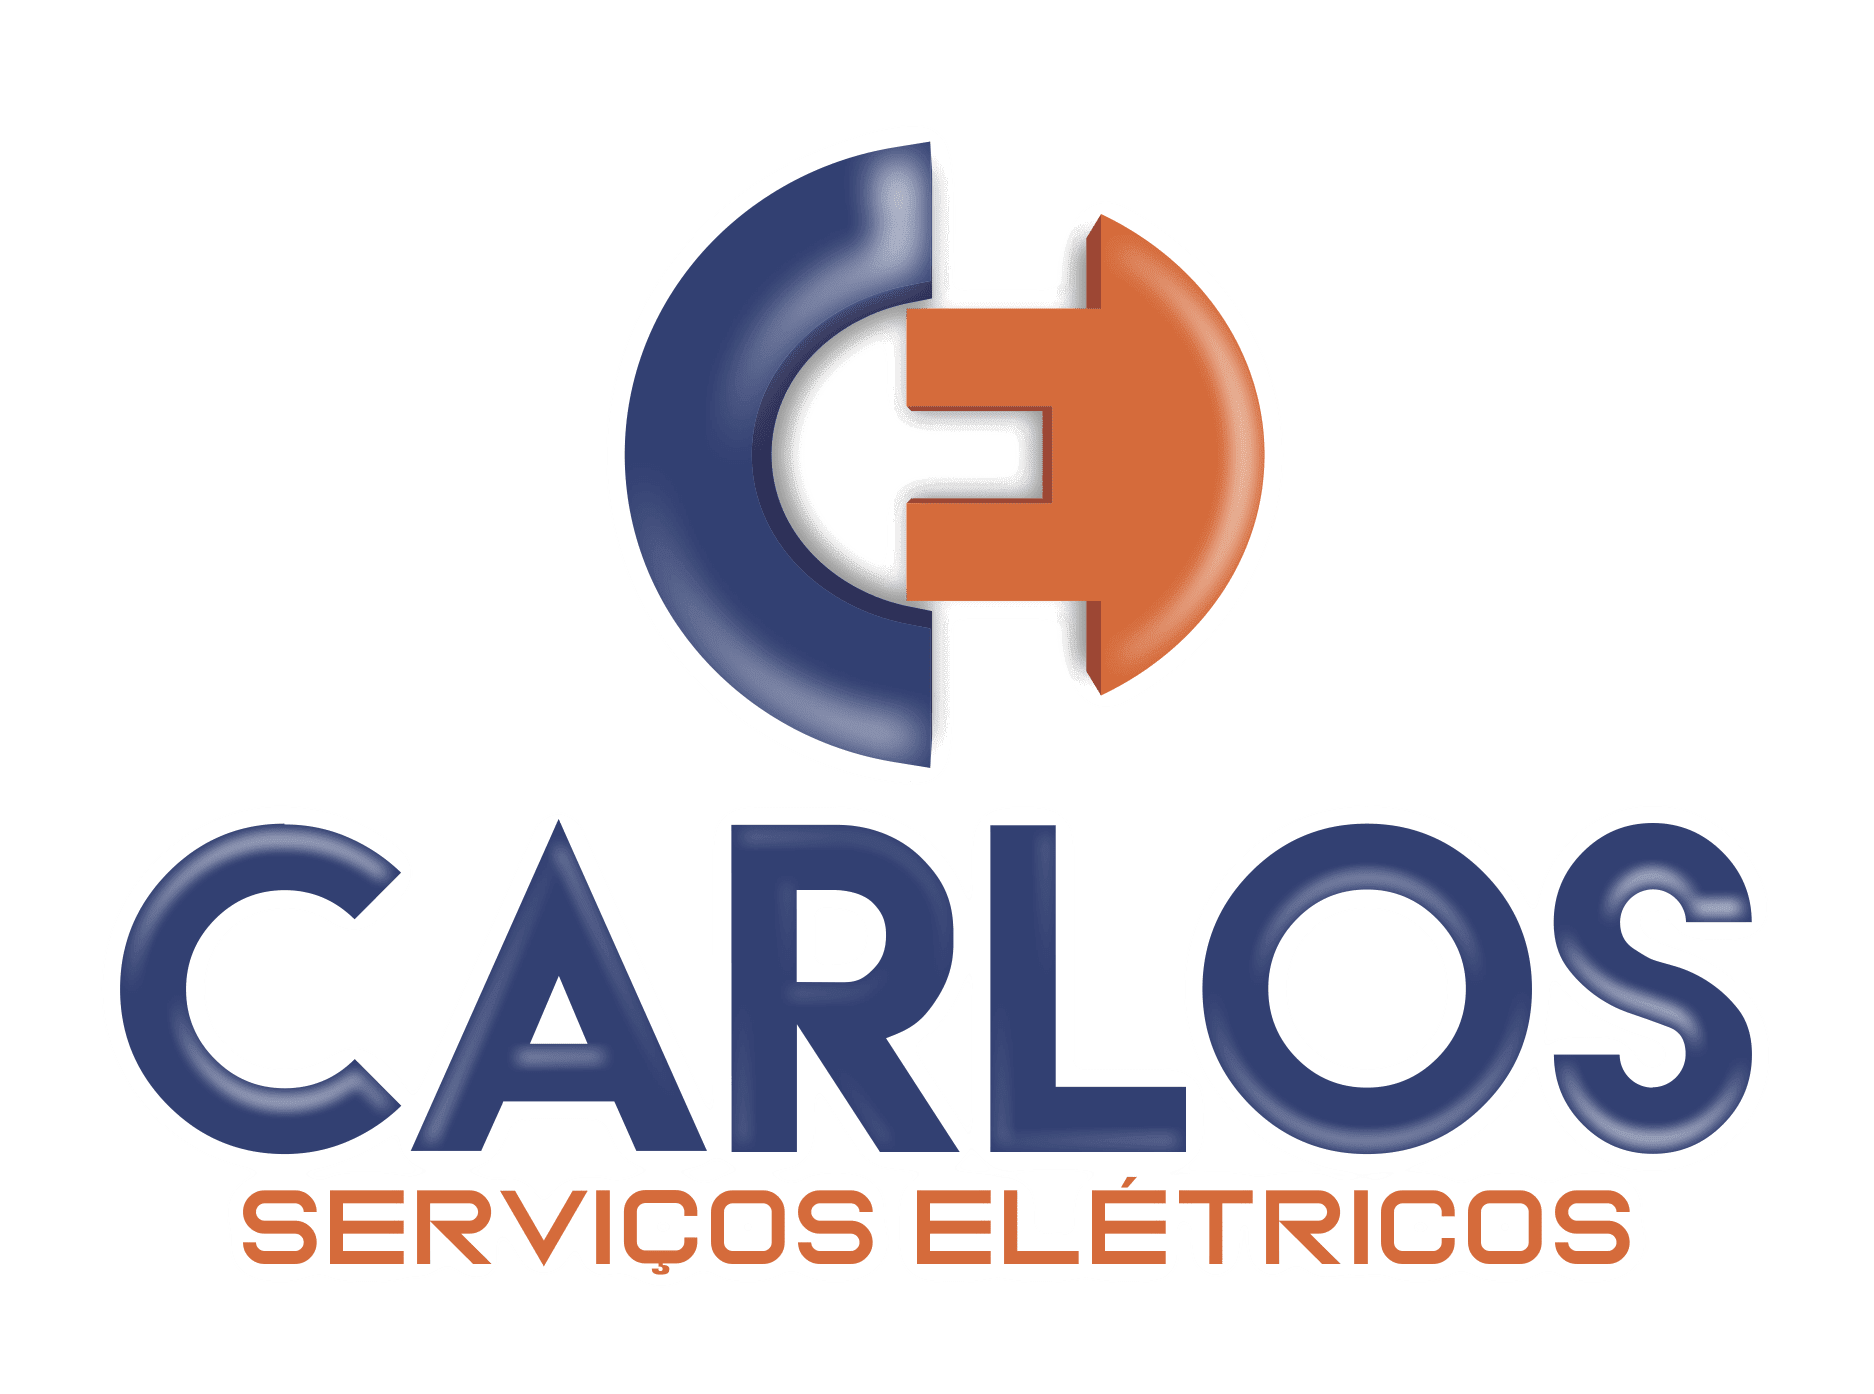 Carlos Serviços Elétricos